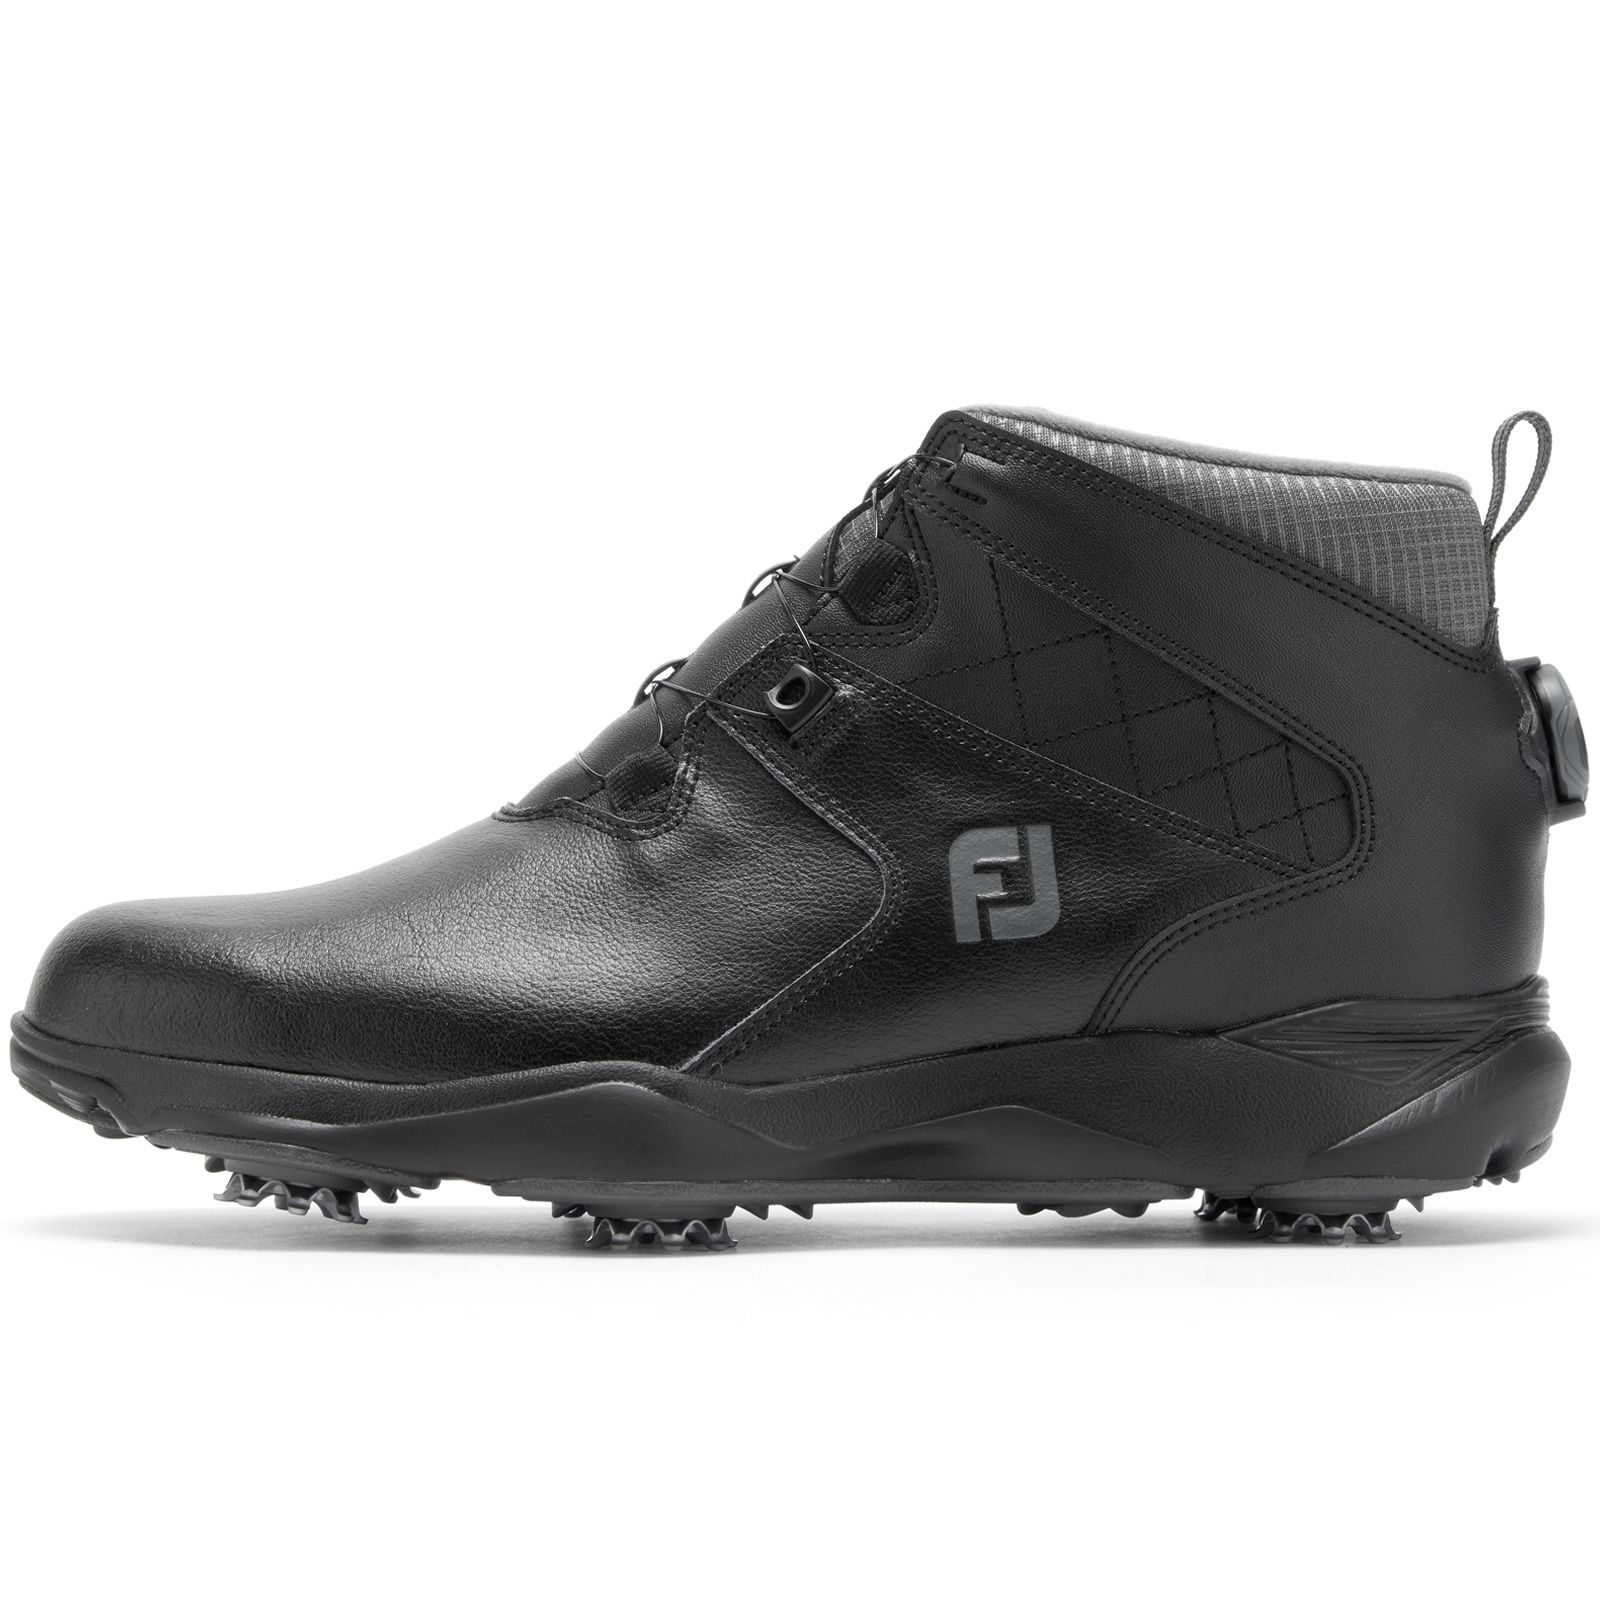 FootJoy FJ Boot BOA Winter Golf Boots #56725 Black | Scottsdale Golf